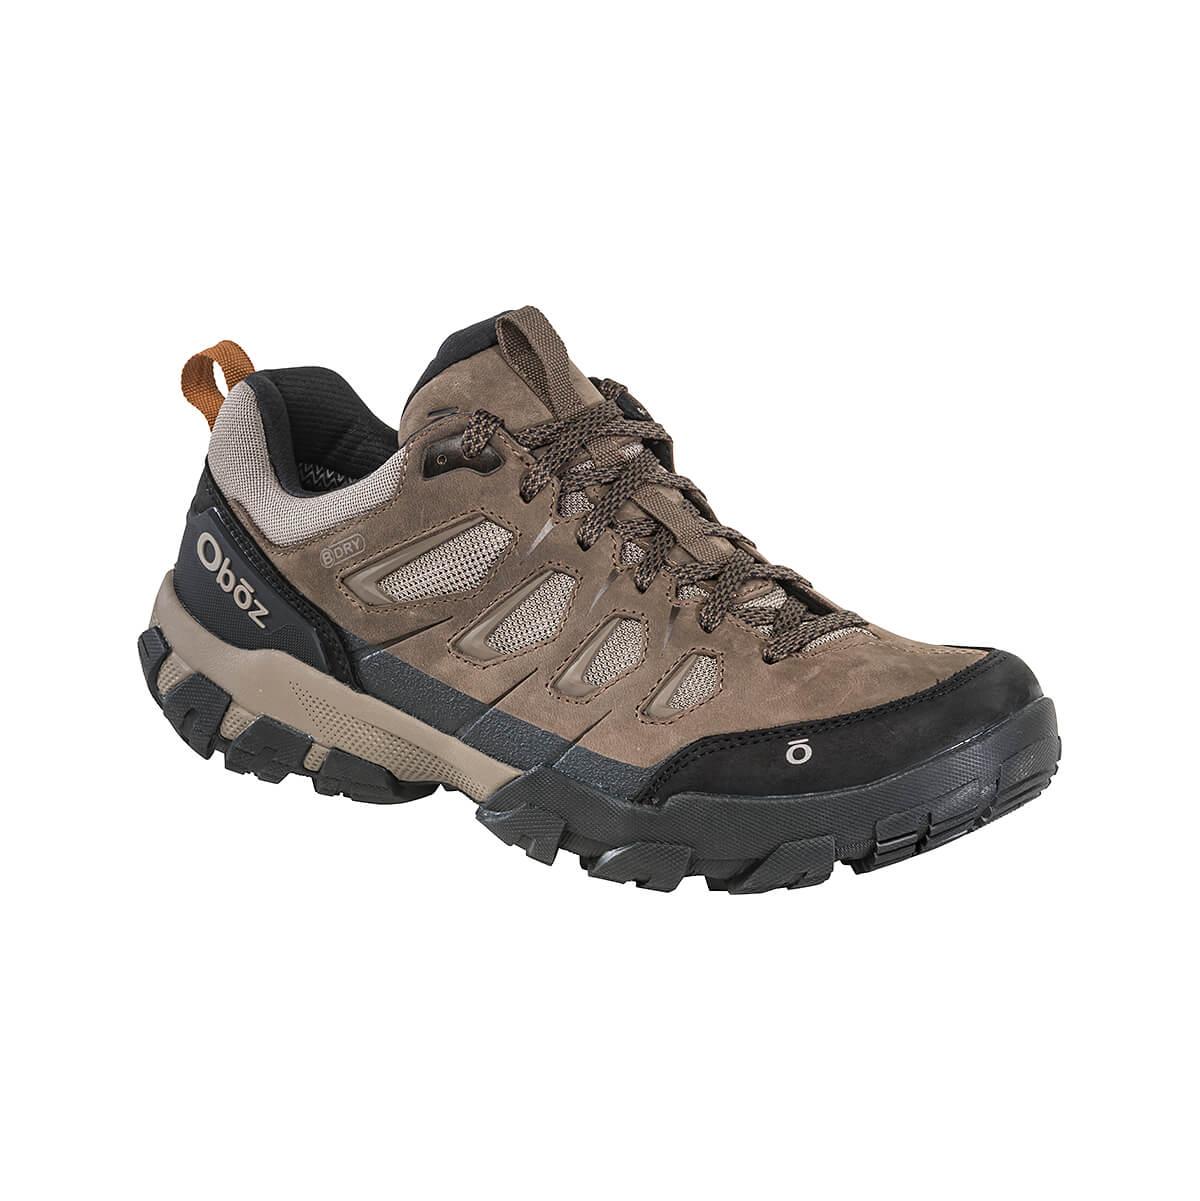  Men's Sawtooth X Low Waterproof Hiking Shoes